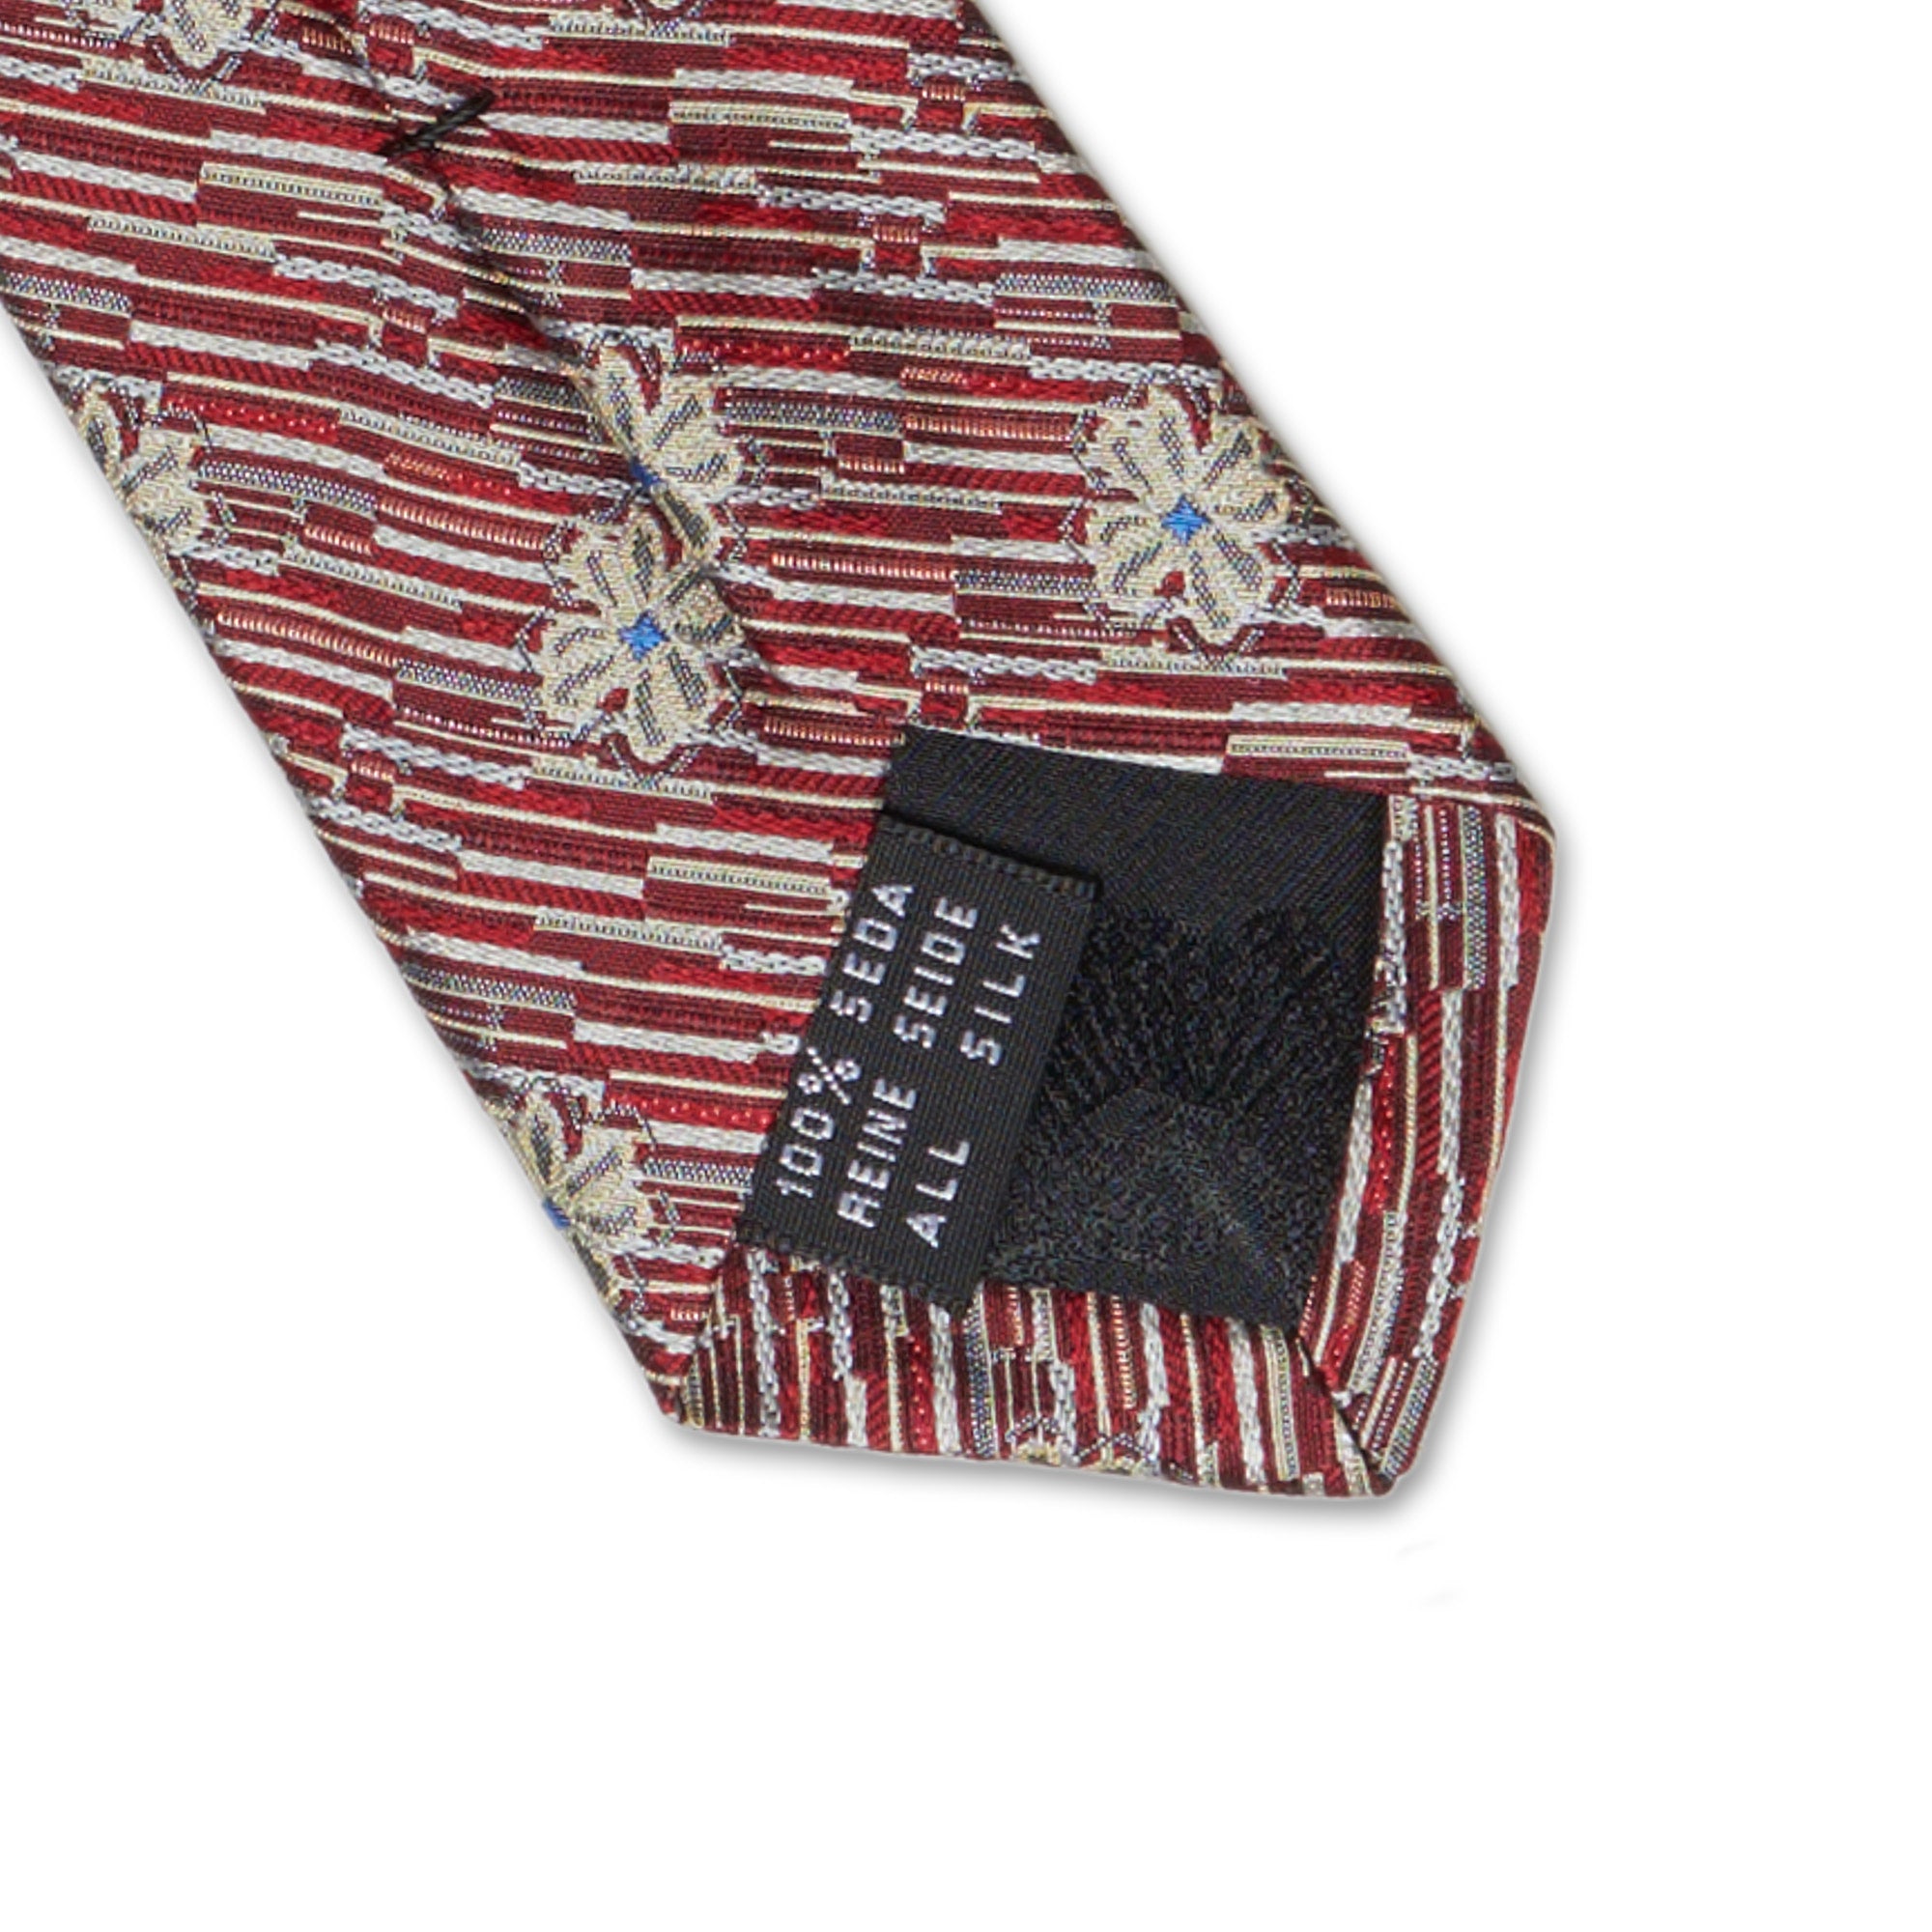 KIESELSTEIN-CORD Handmade Red Floral Design Silk Tie – SARTORIALE